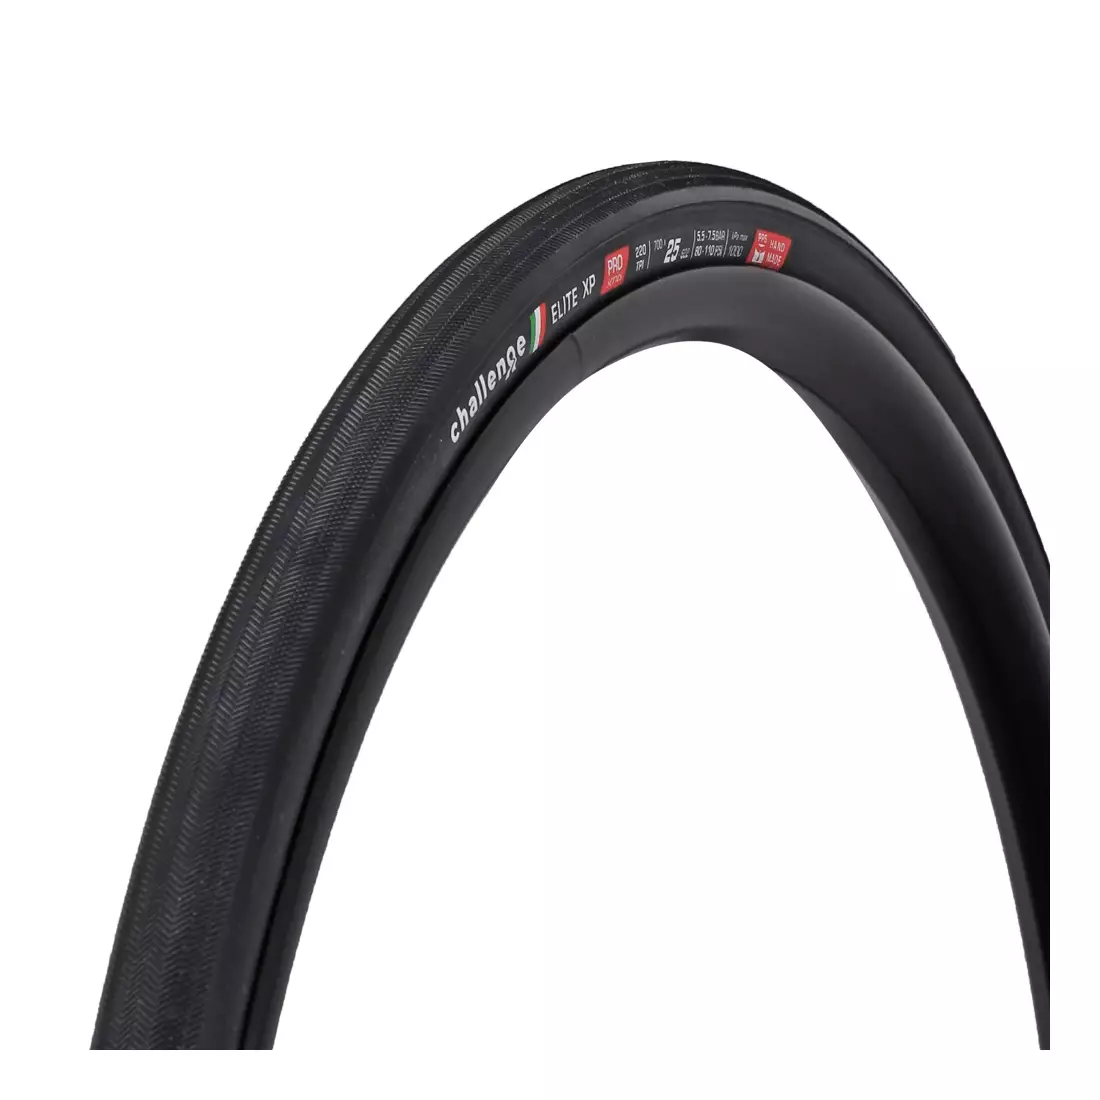 CHALLENGE ELITE XP road bike tire (700x25mm), 220 TPI, black